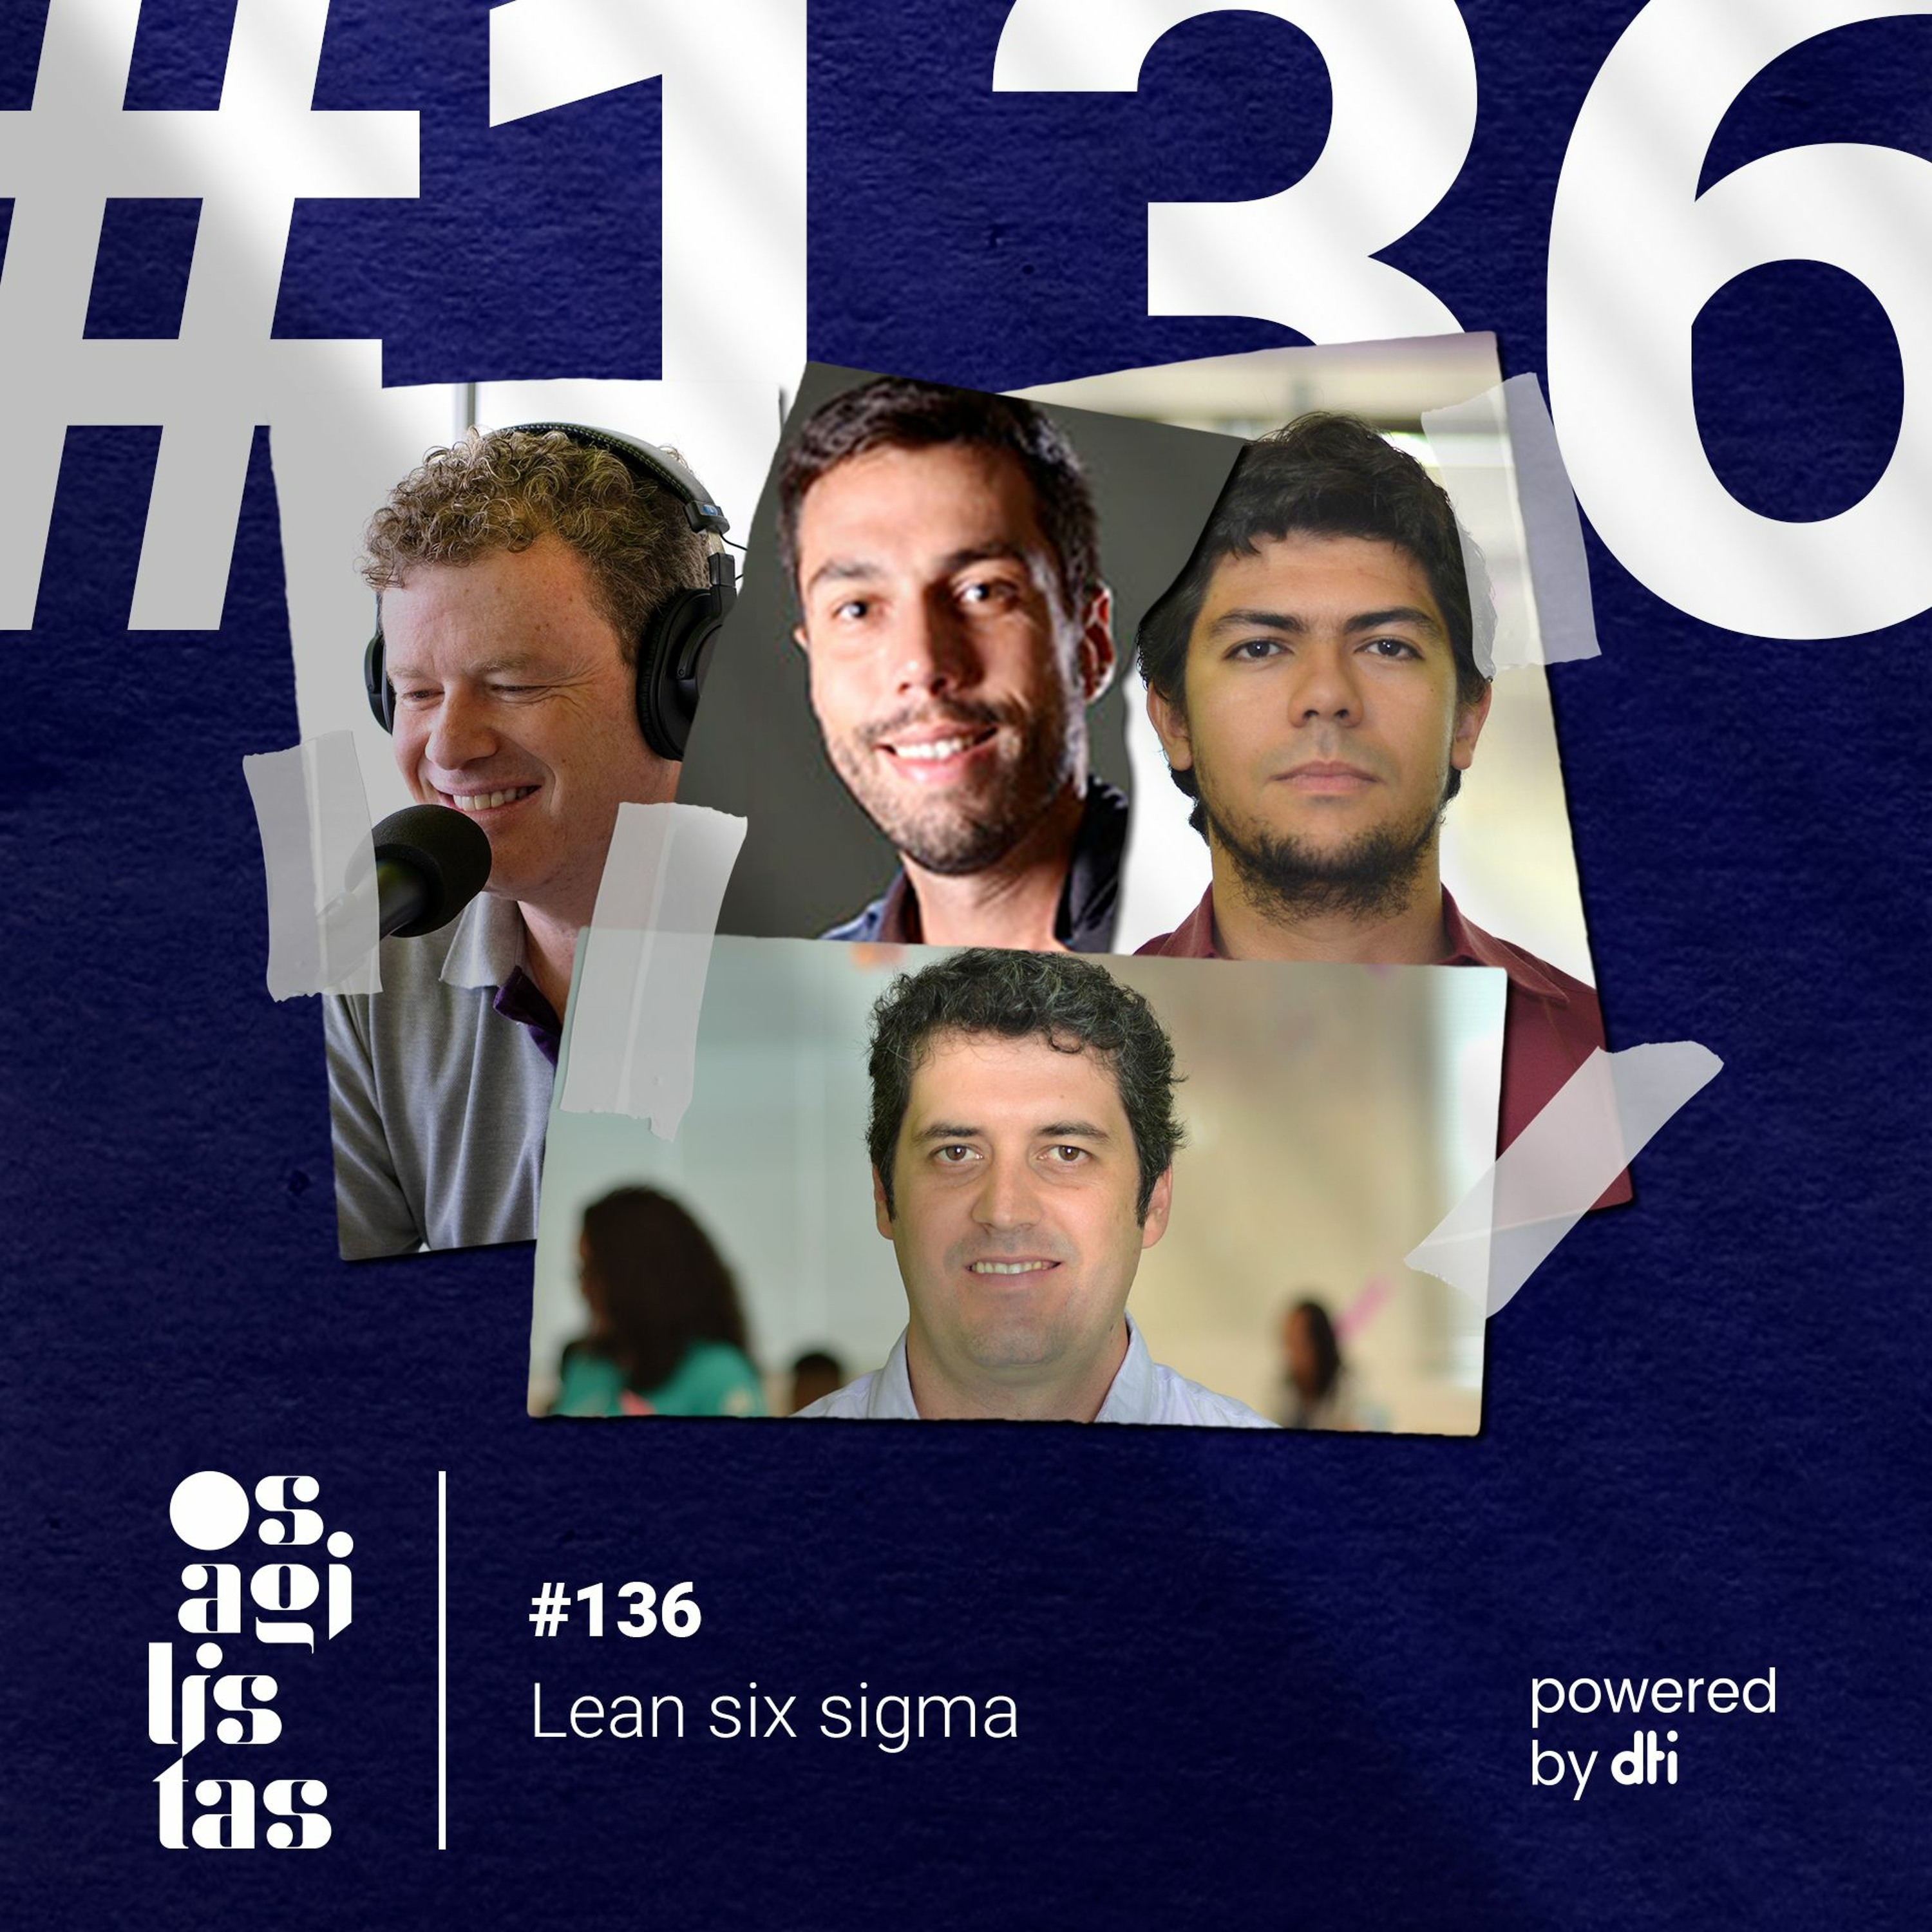 #136 - Lean six sigma